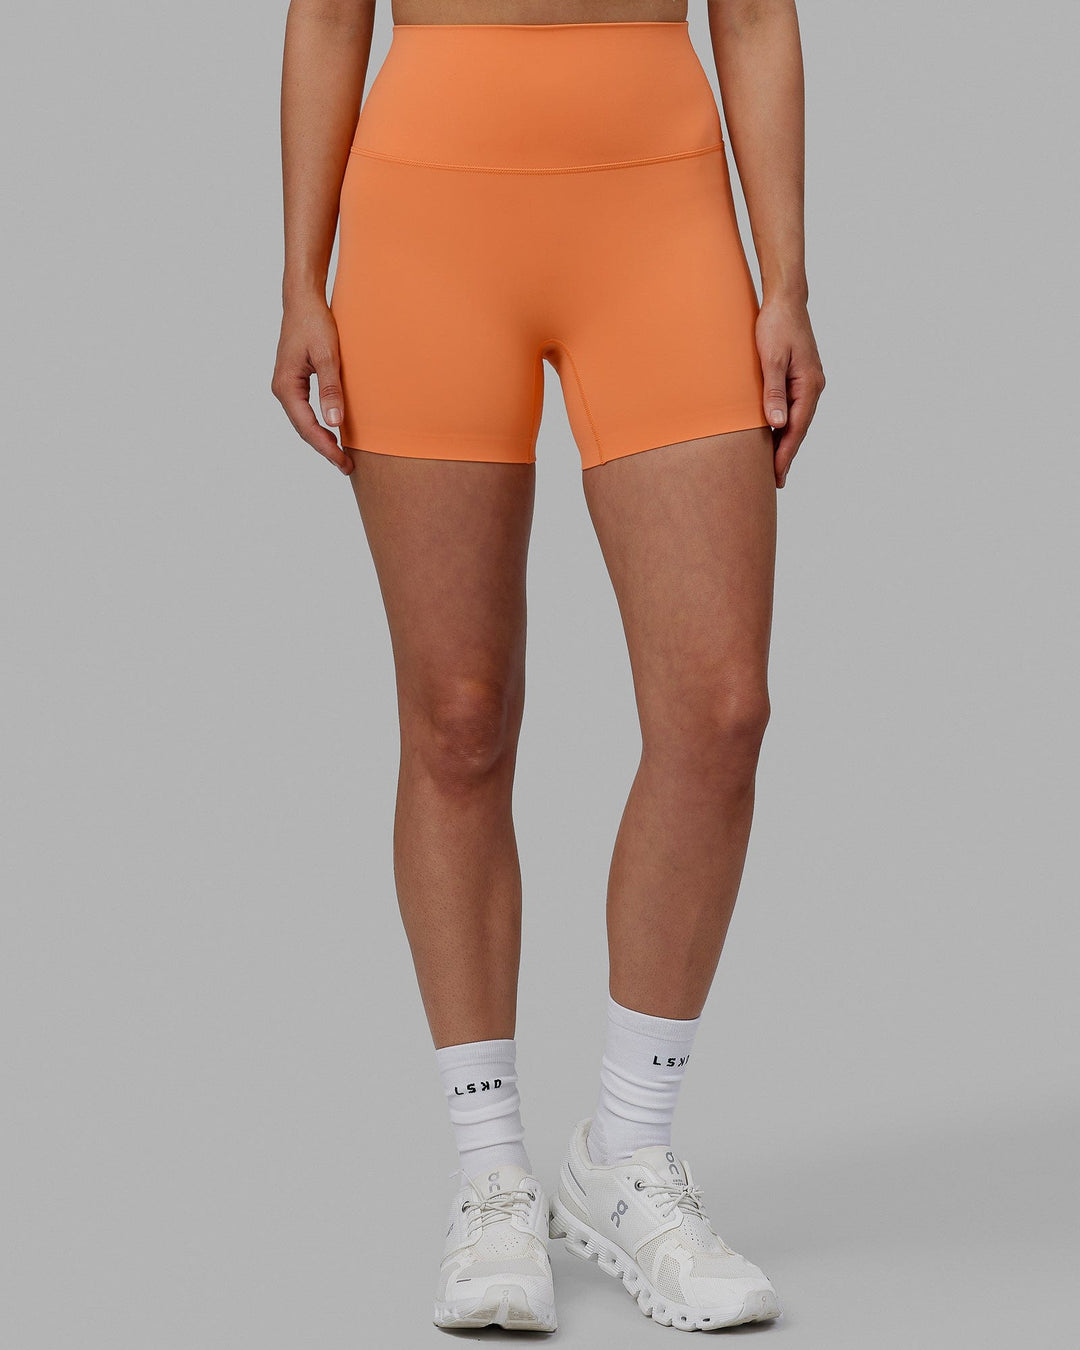 Woman wearing Elixir X-Short Tights - Tangerine